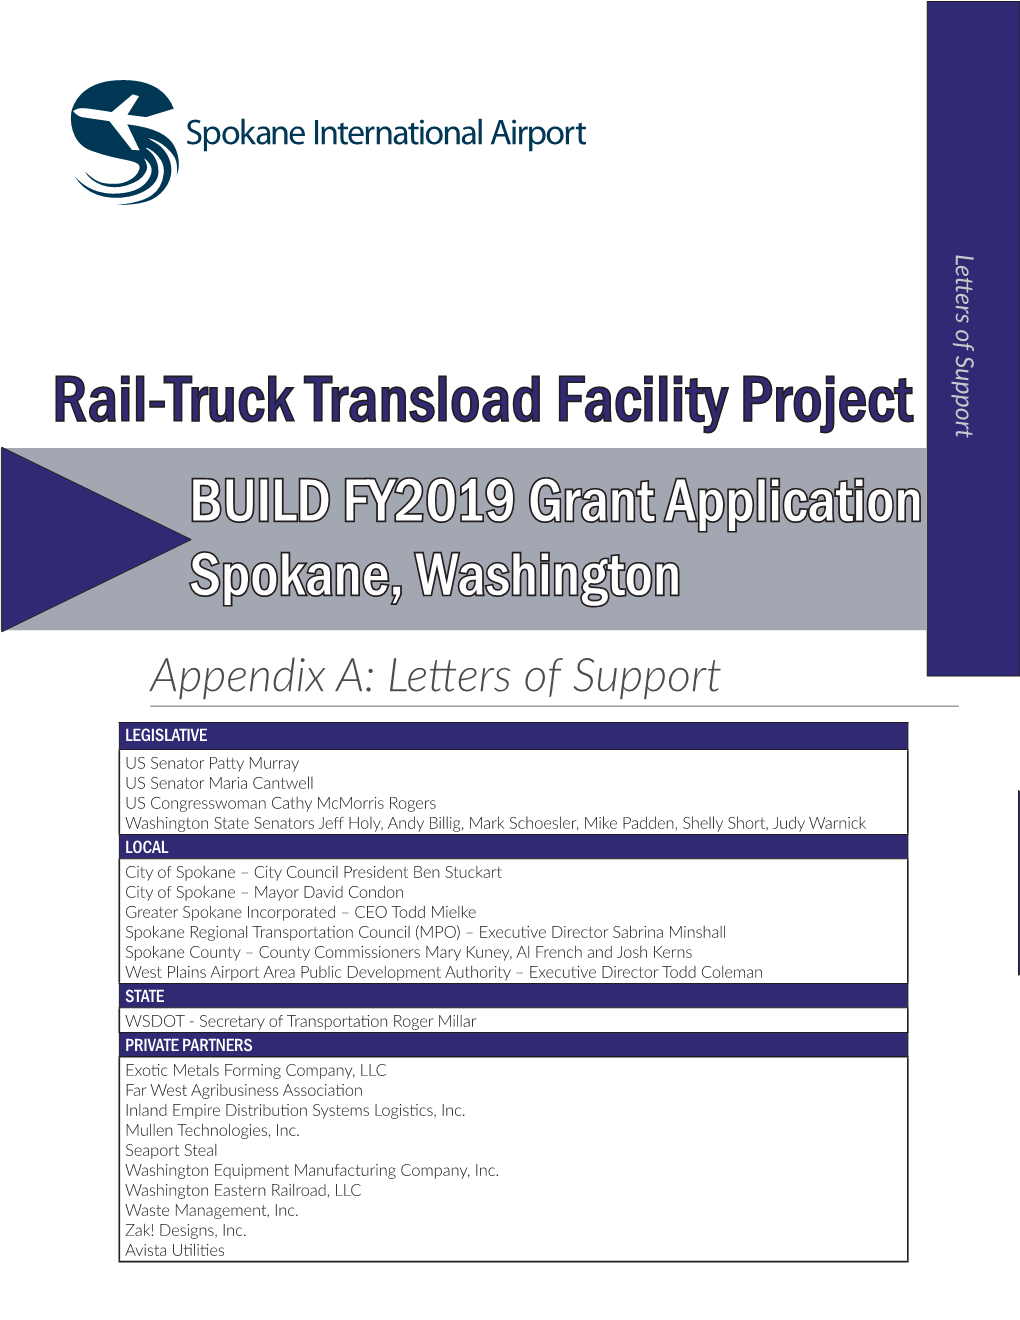 Rail-Truck Transload Facility Project Facility Transload Rail-Truck